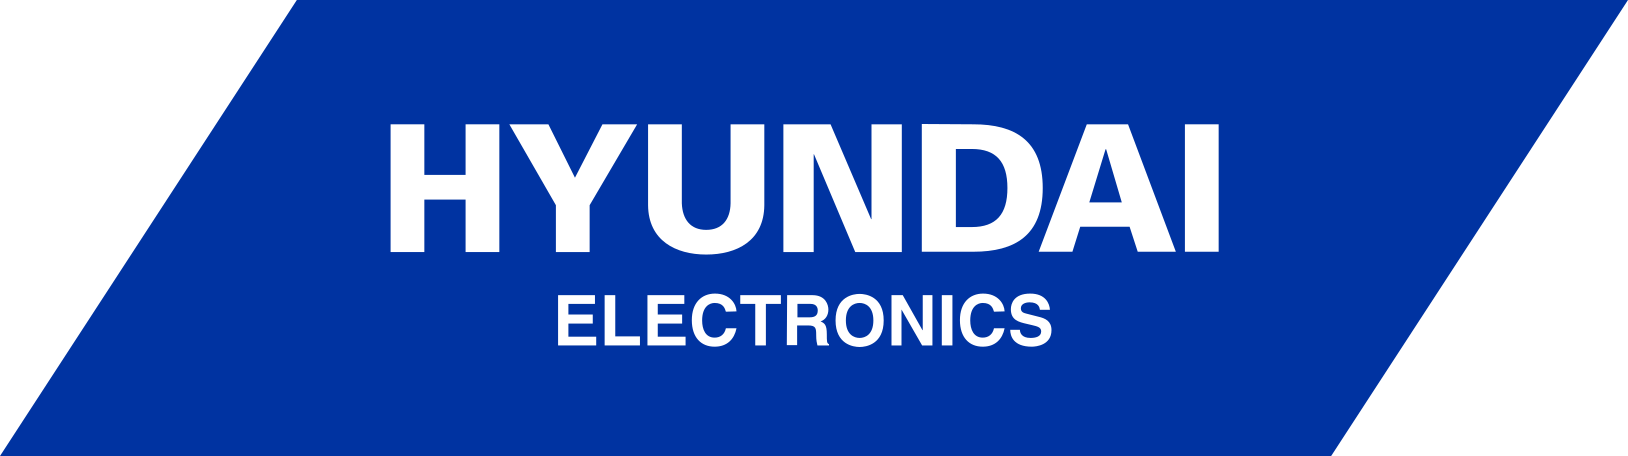 Tienda Hyundai Electronics